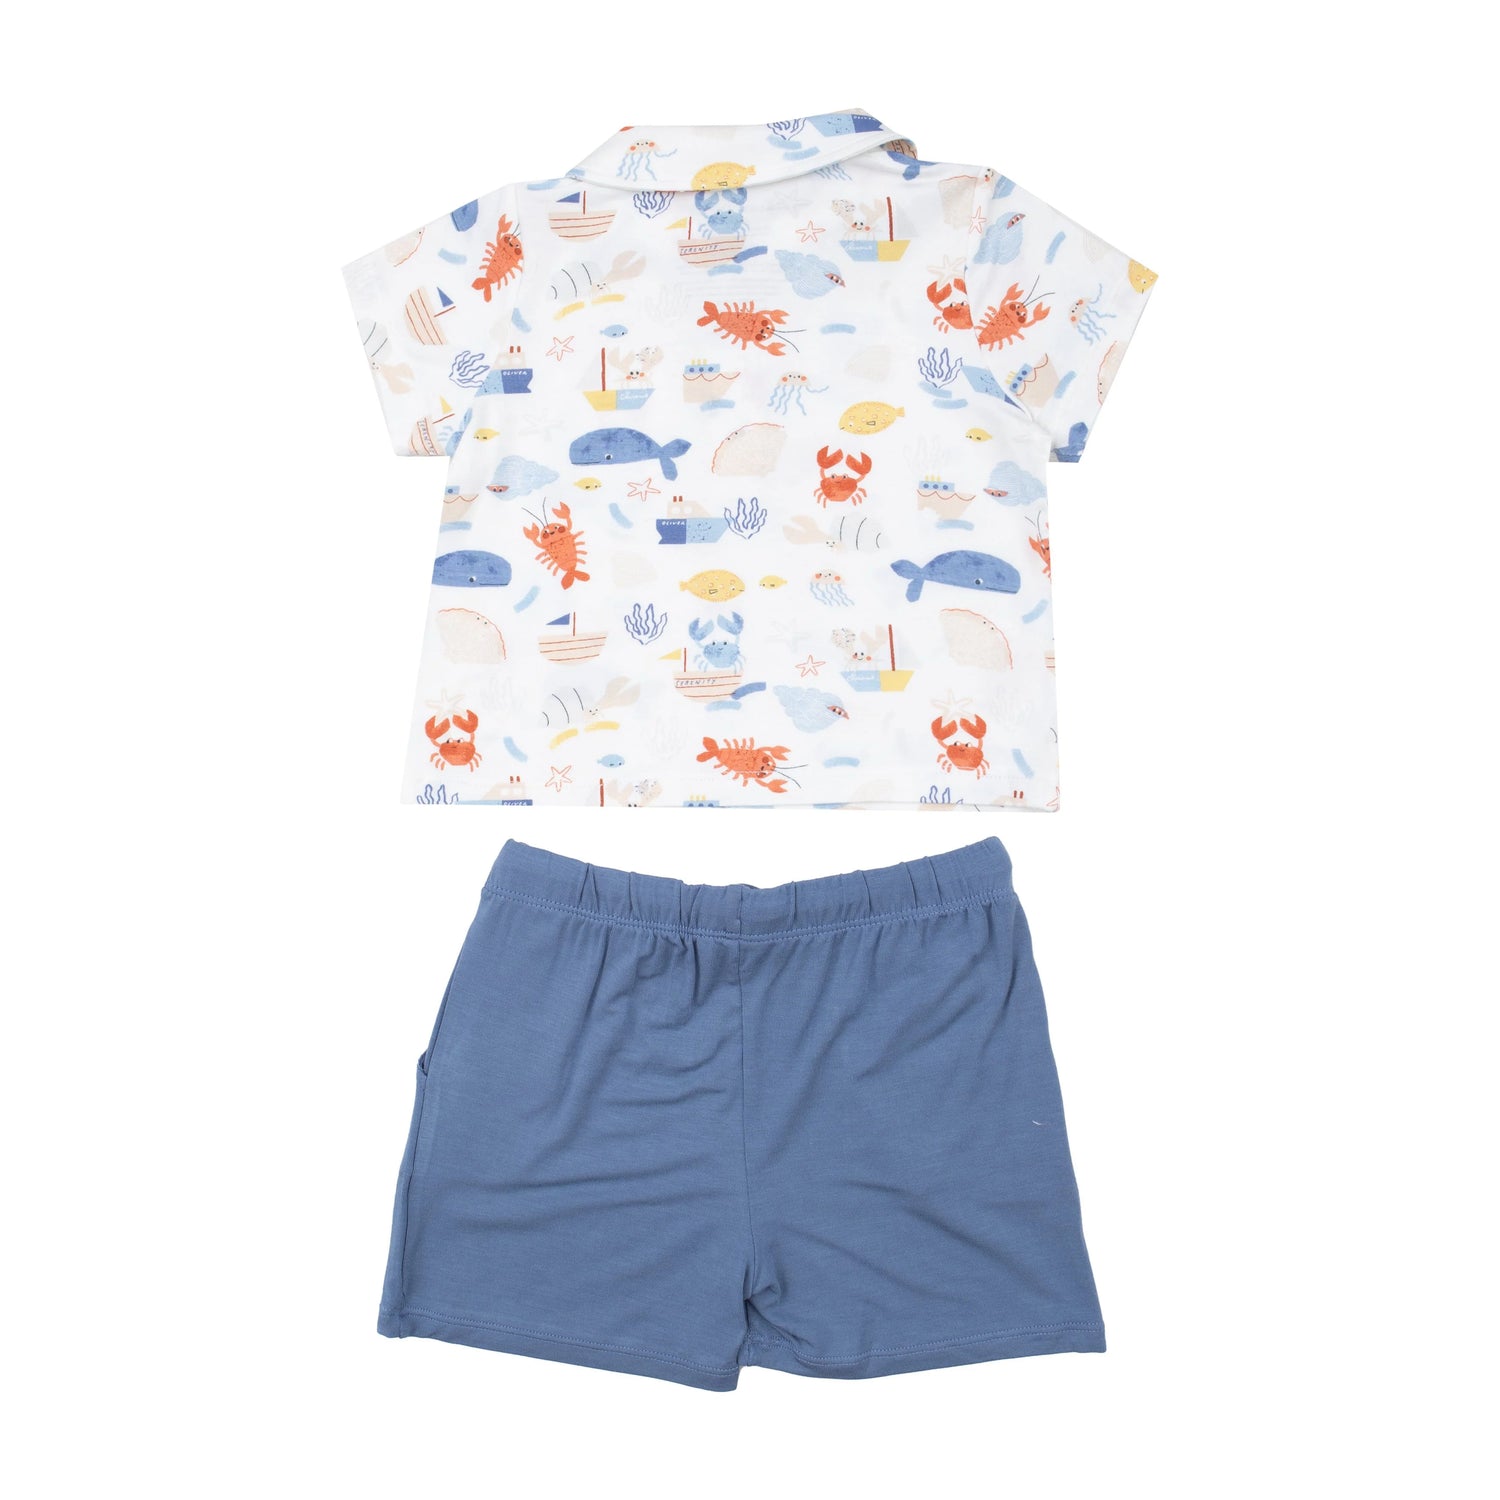 white ocean print polo shirt and matching blue shorts